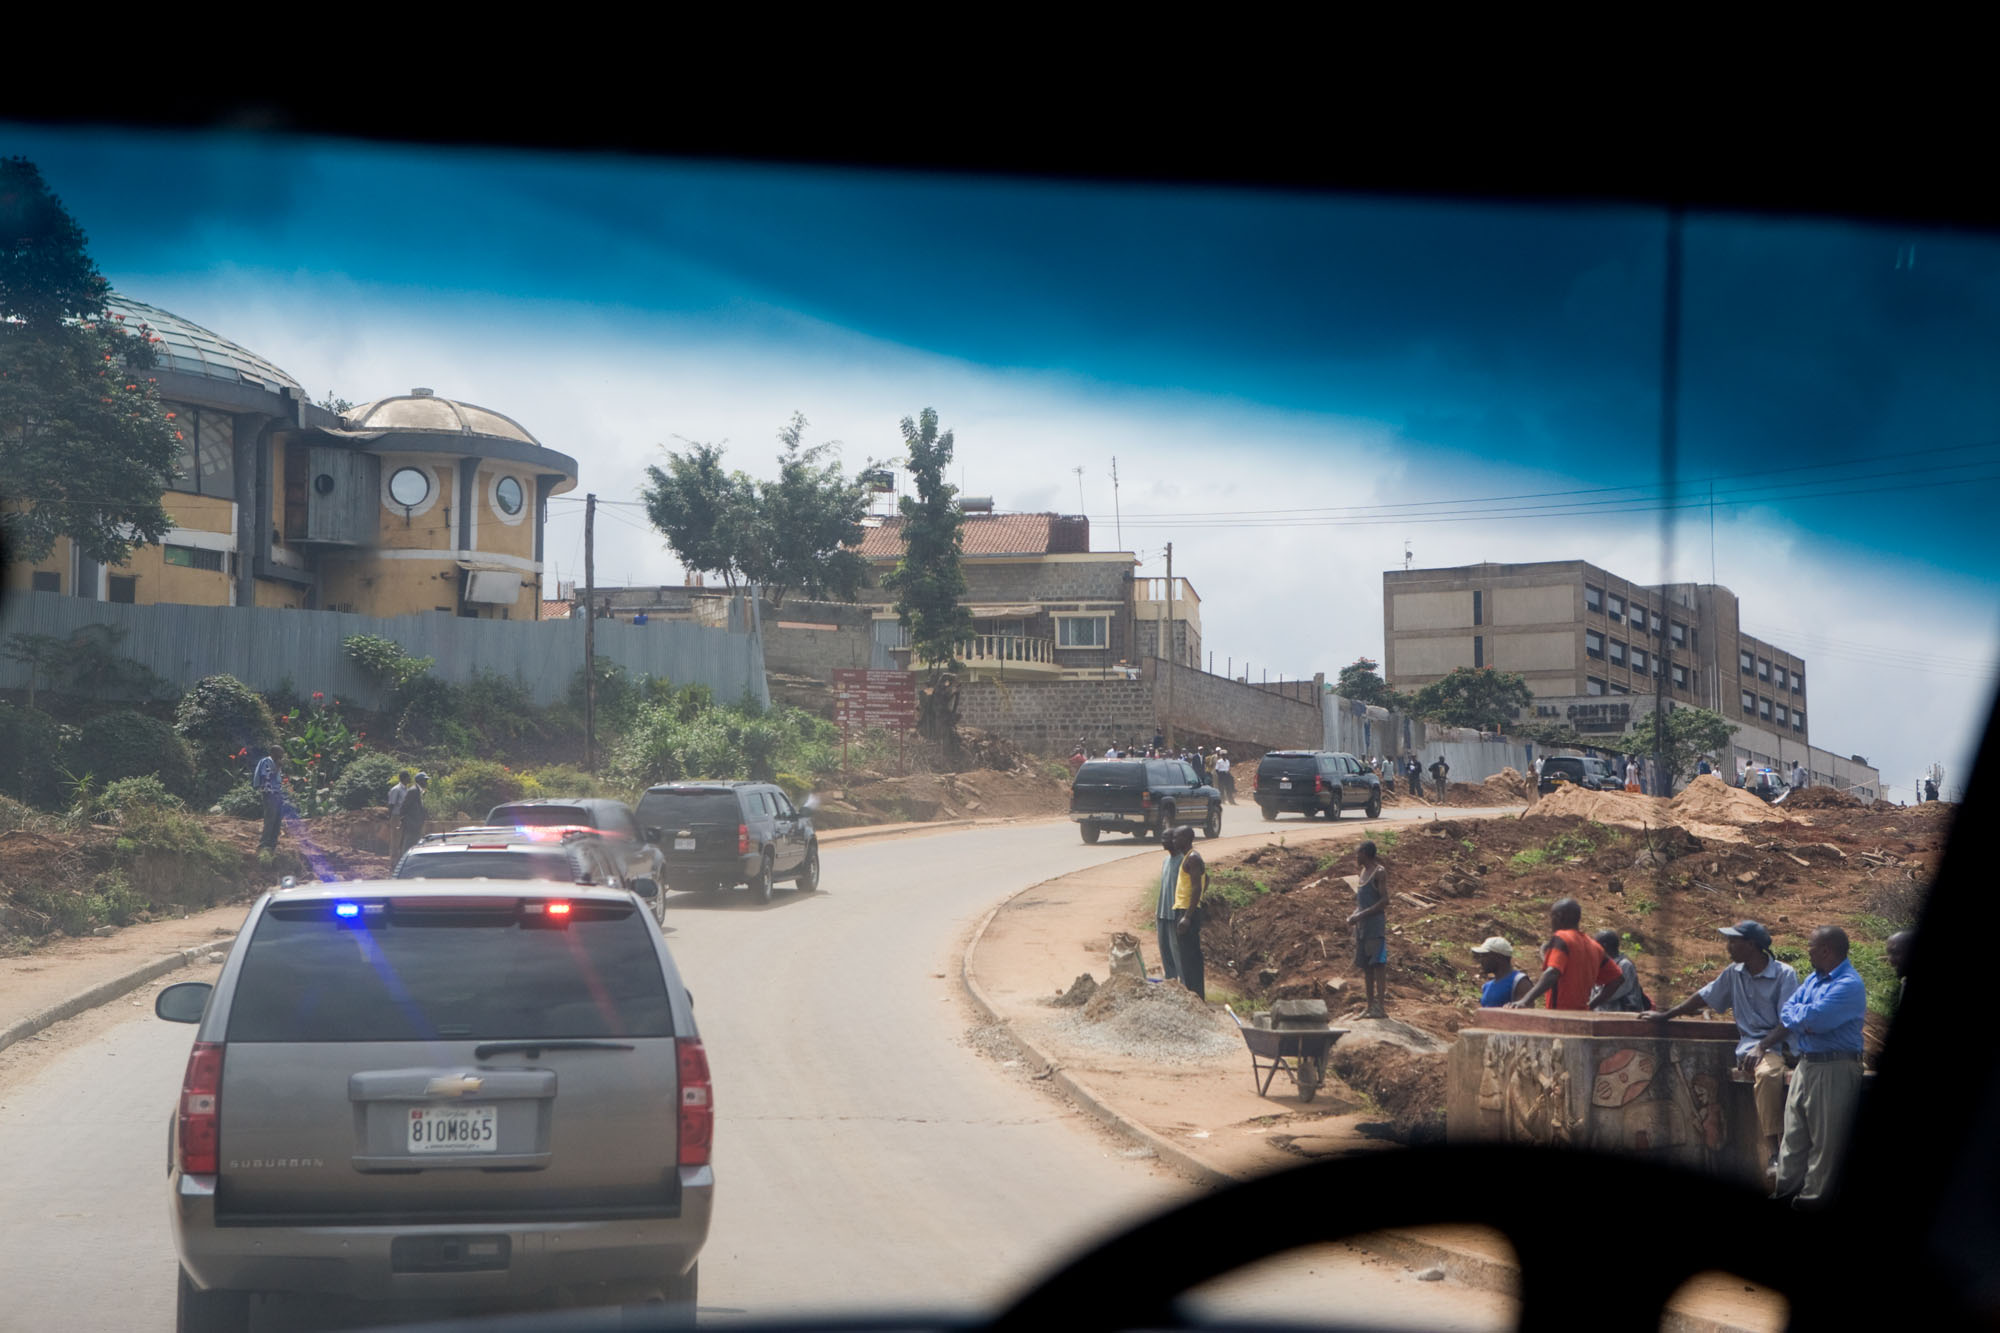 Vice President Joe Biden's Motorcade En Route to the US Ambassador's Residence in Kenya